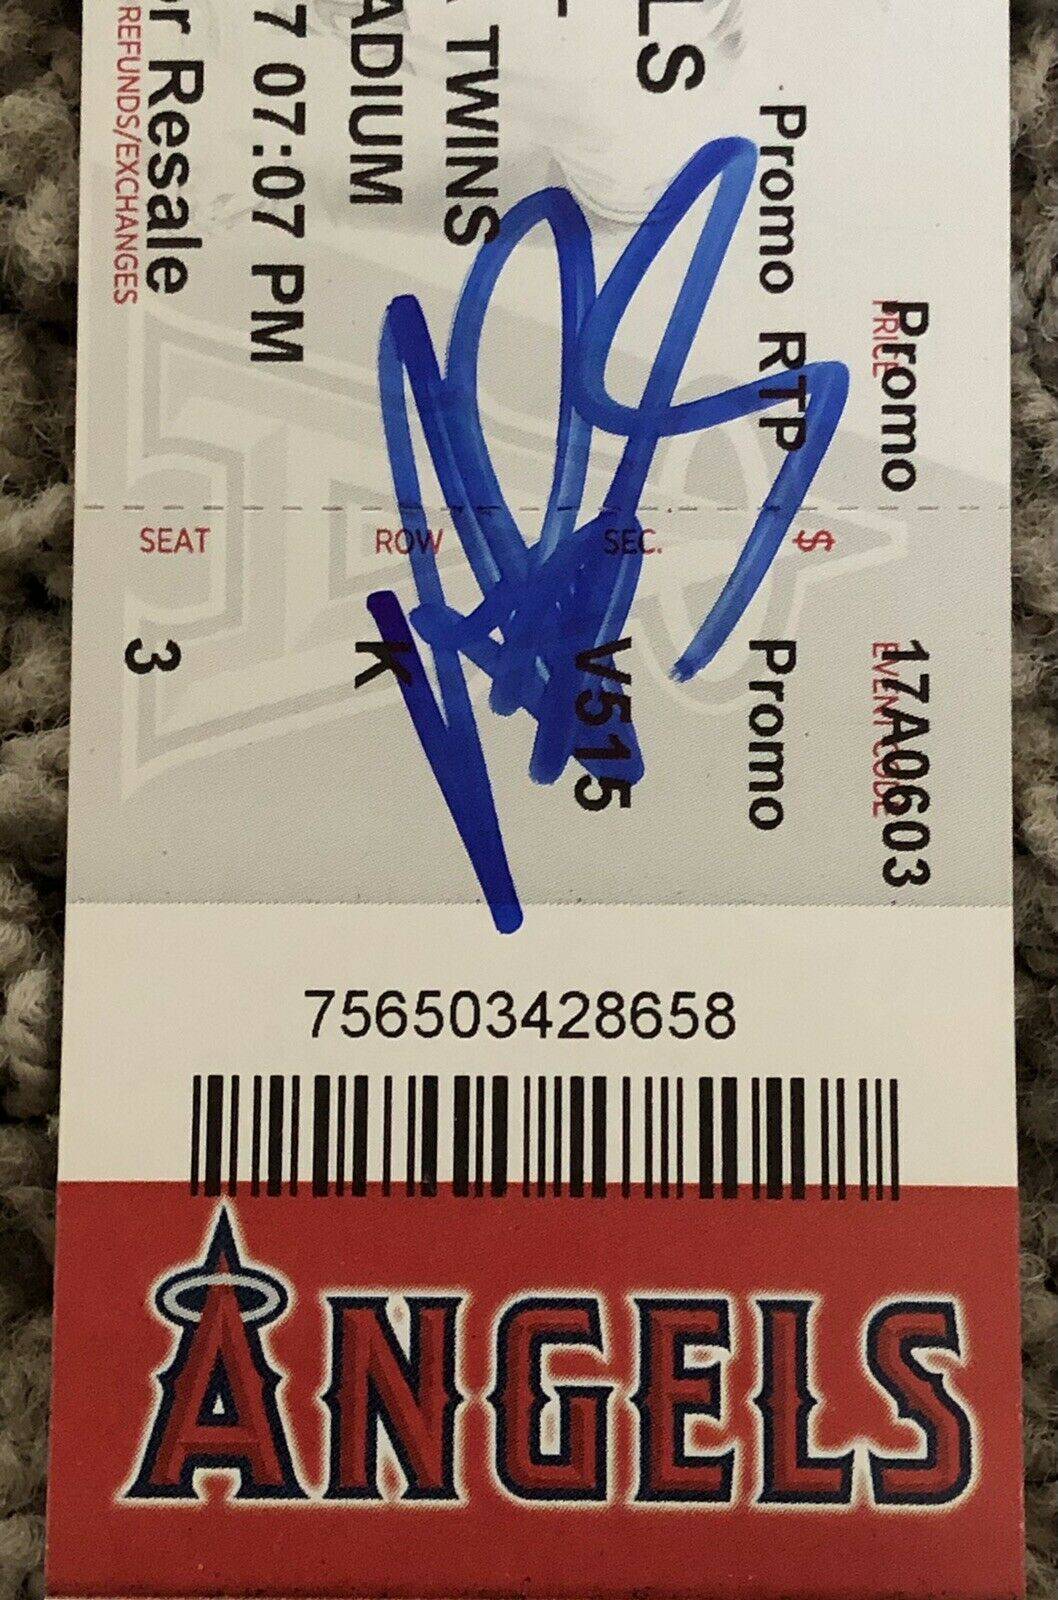 Albert Pujols Autographed Signed 600th HR Homerun Full Ticket 6-3-17 w/ JSA COA